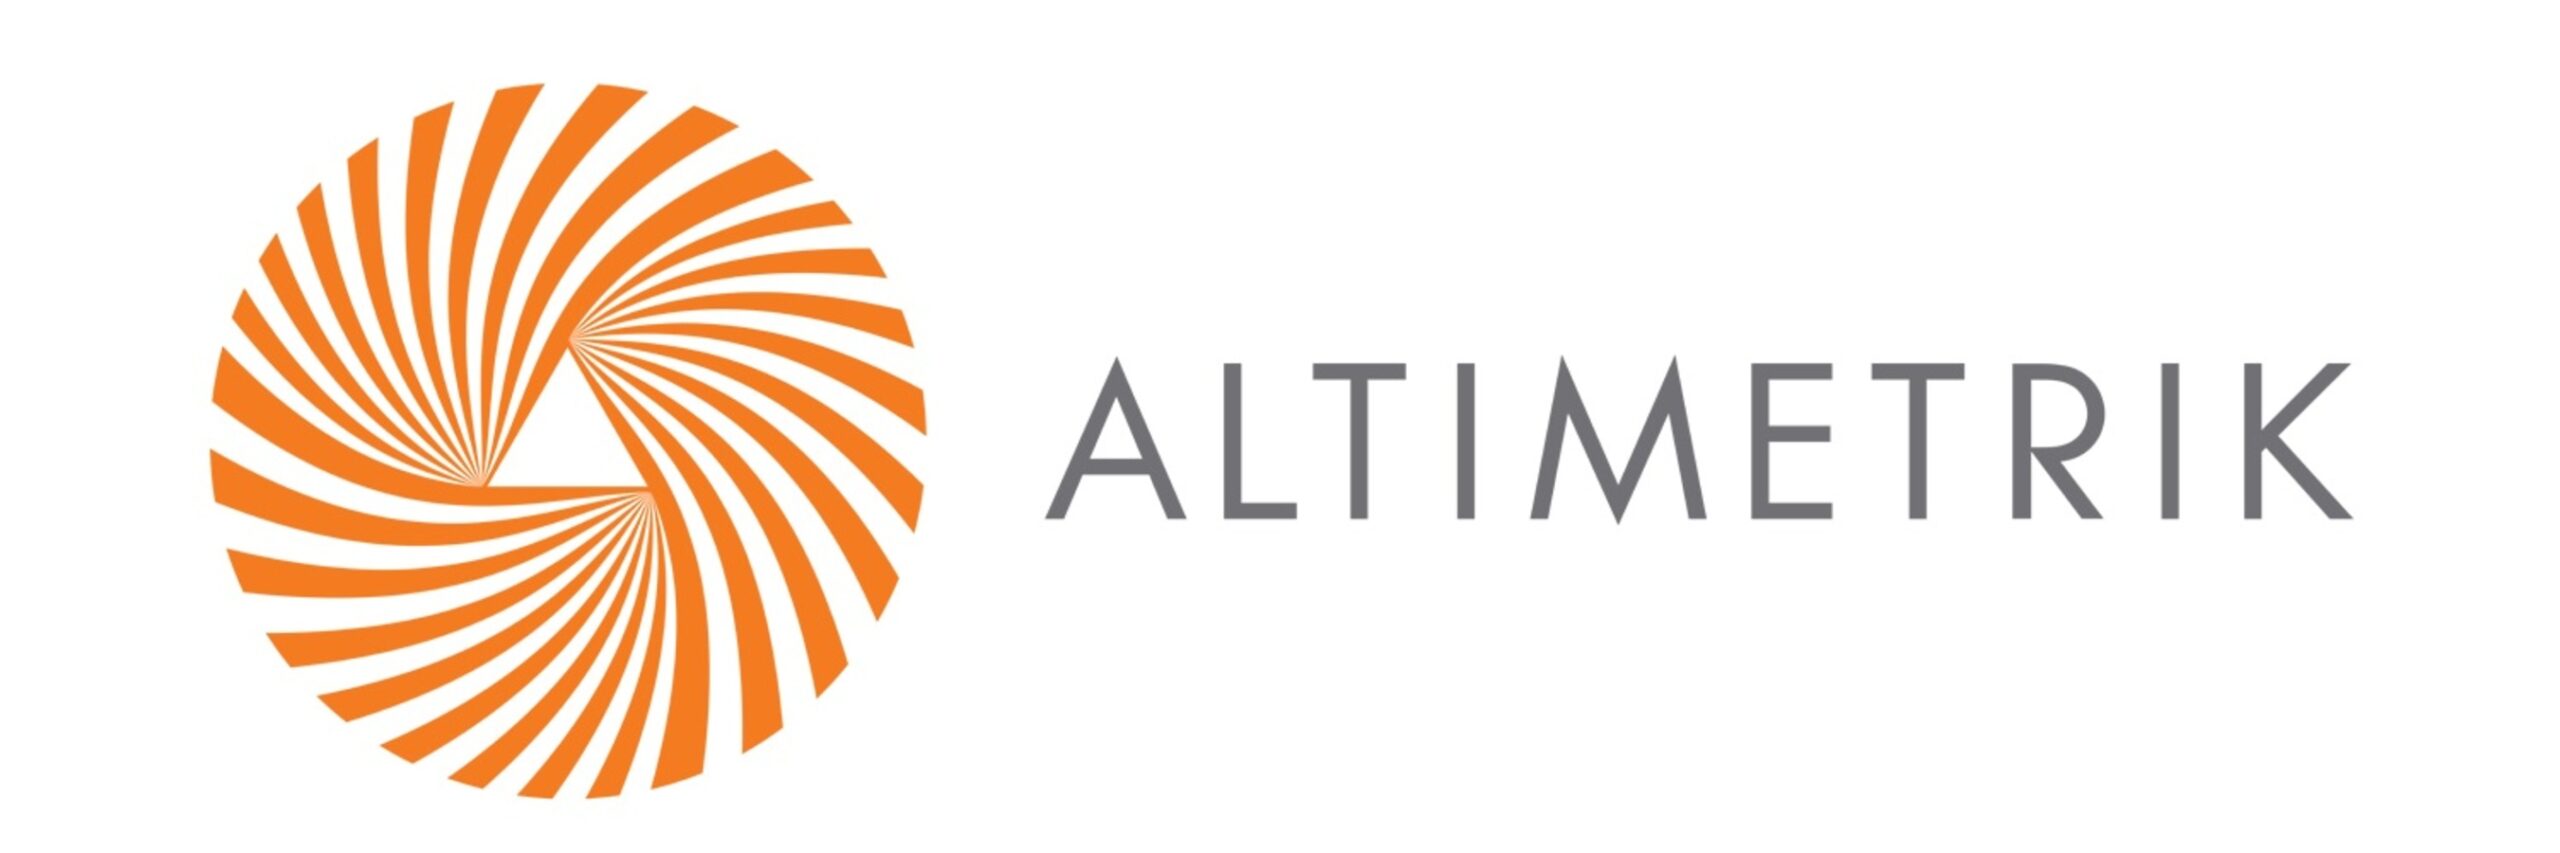 Altimetrik_Logo